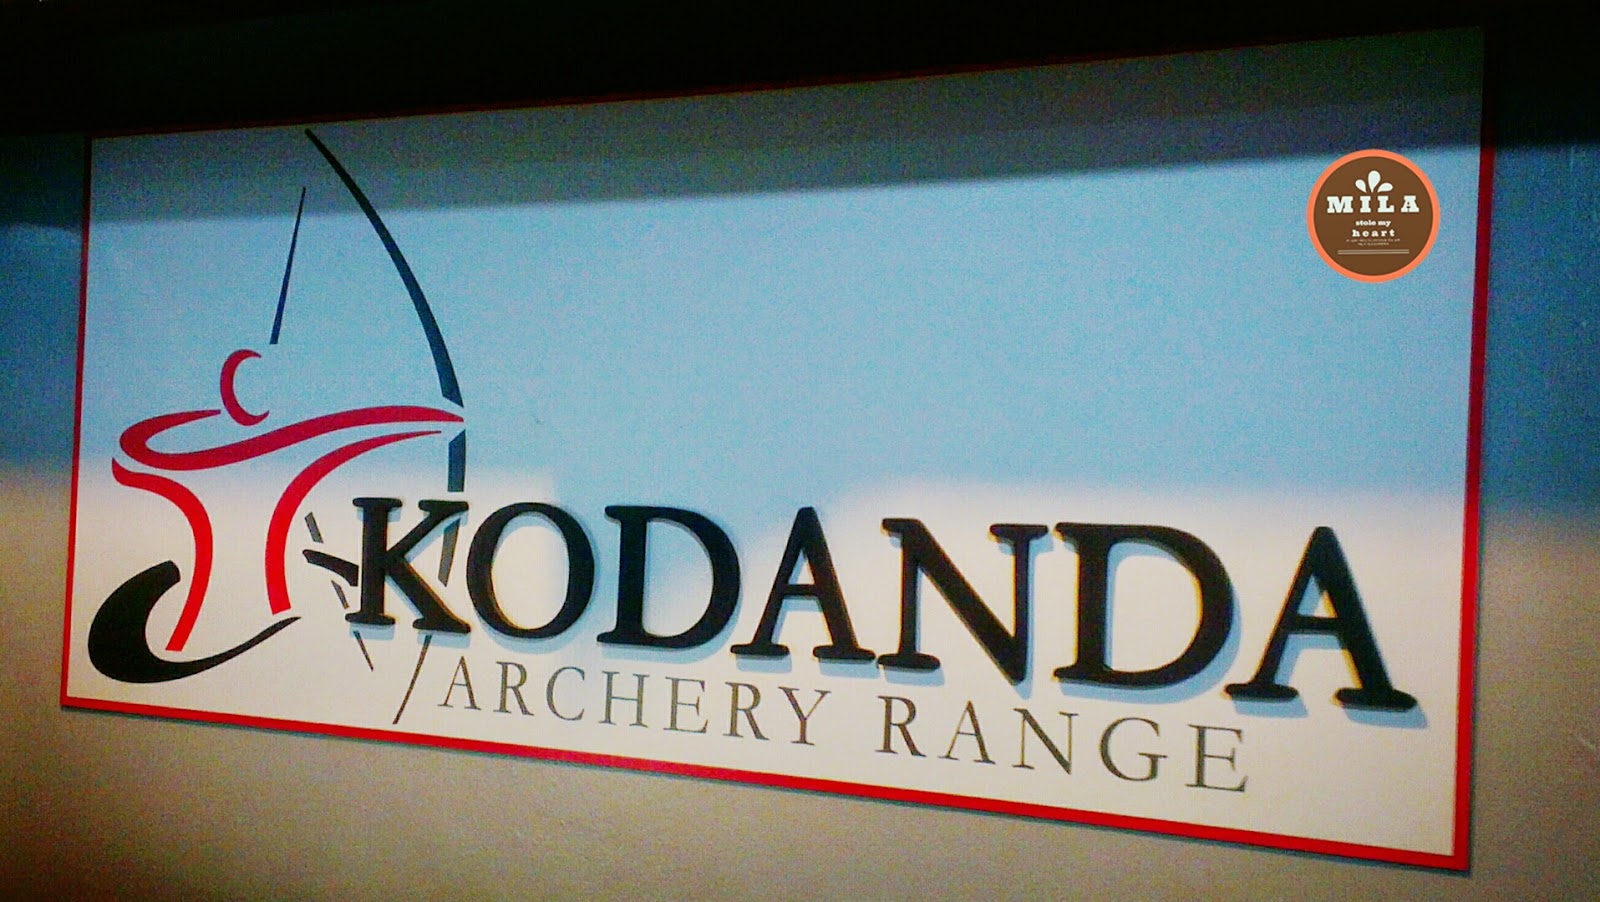 Kodanda Archery Range Sign